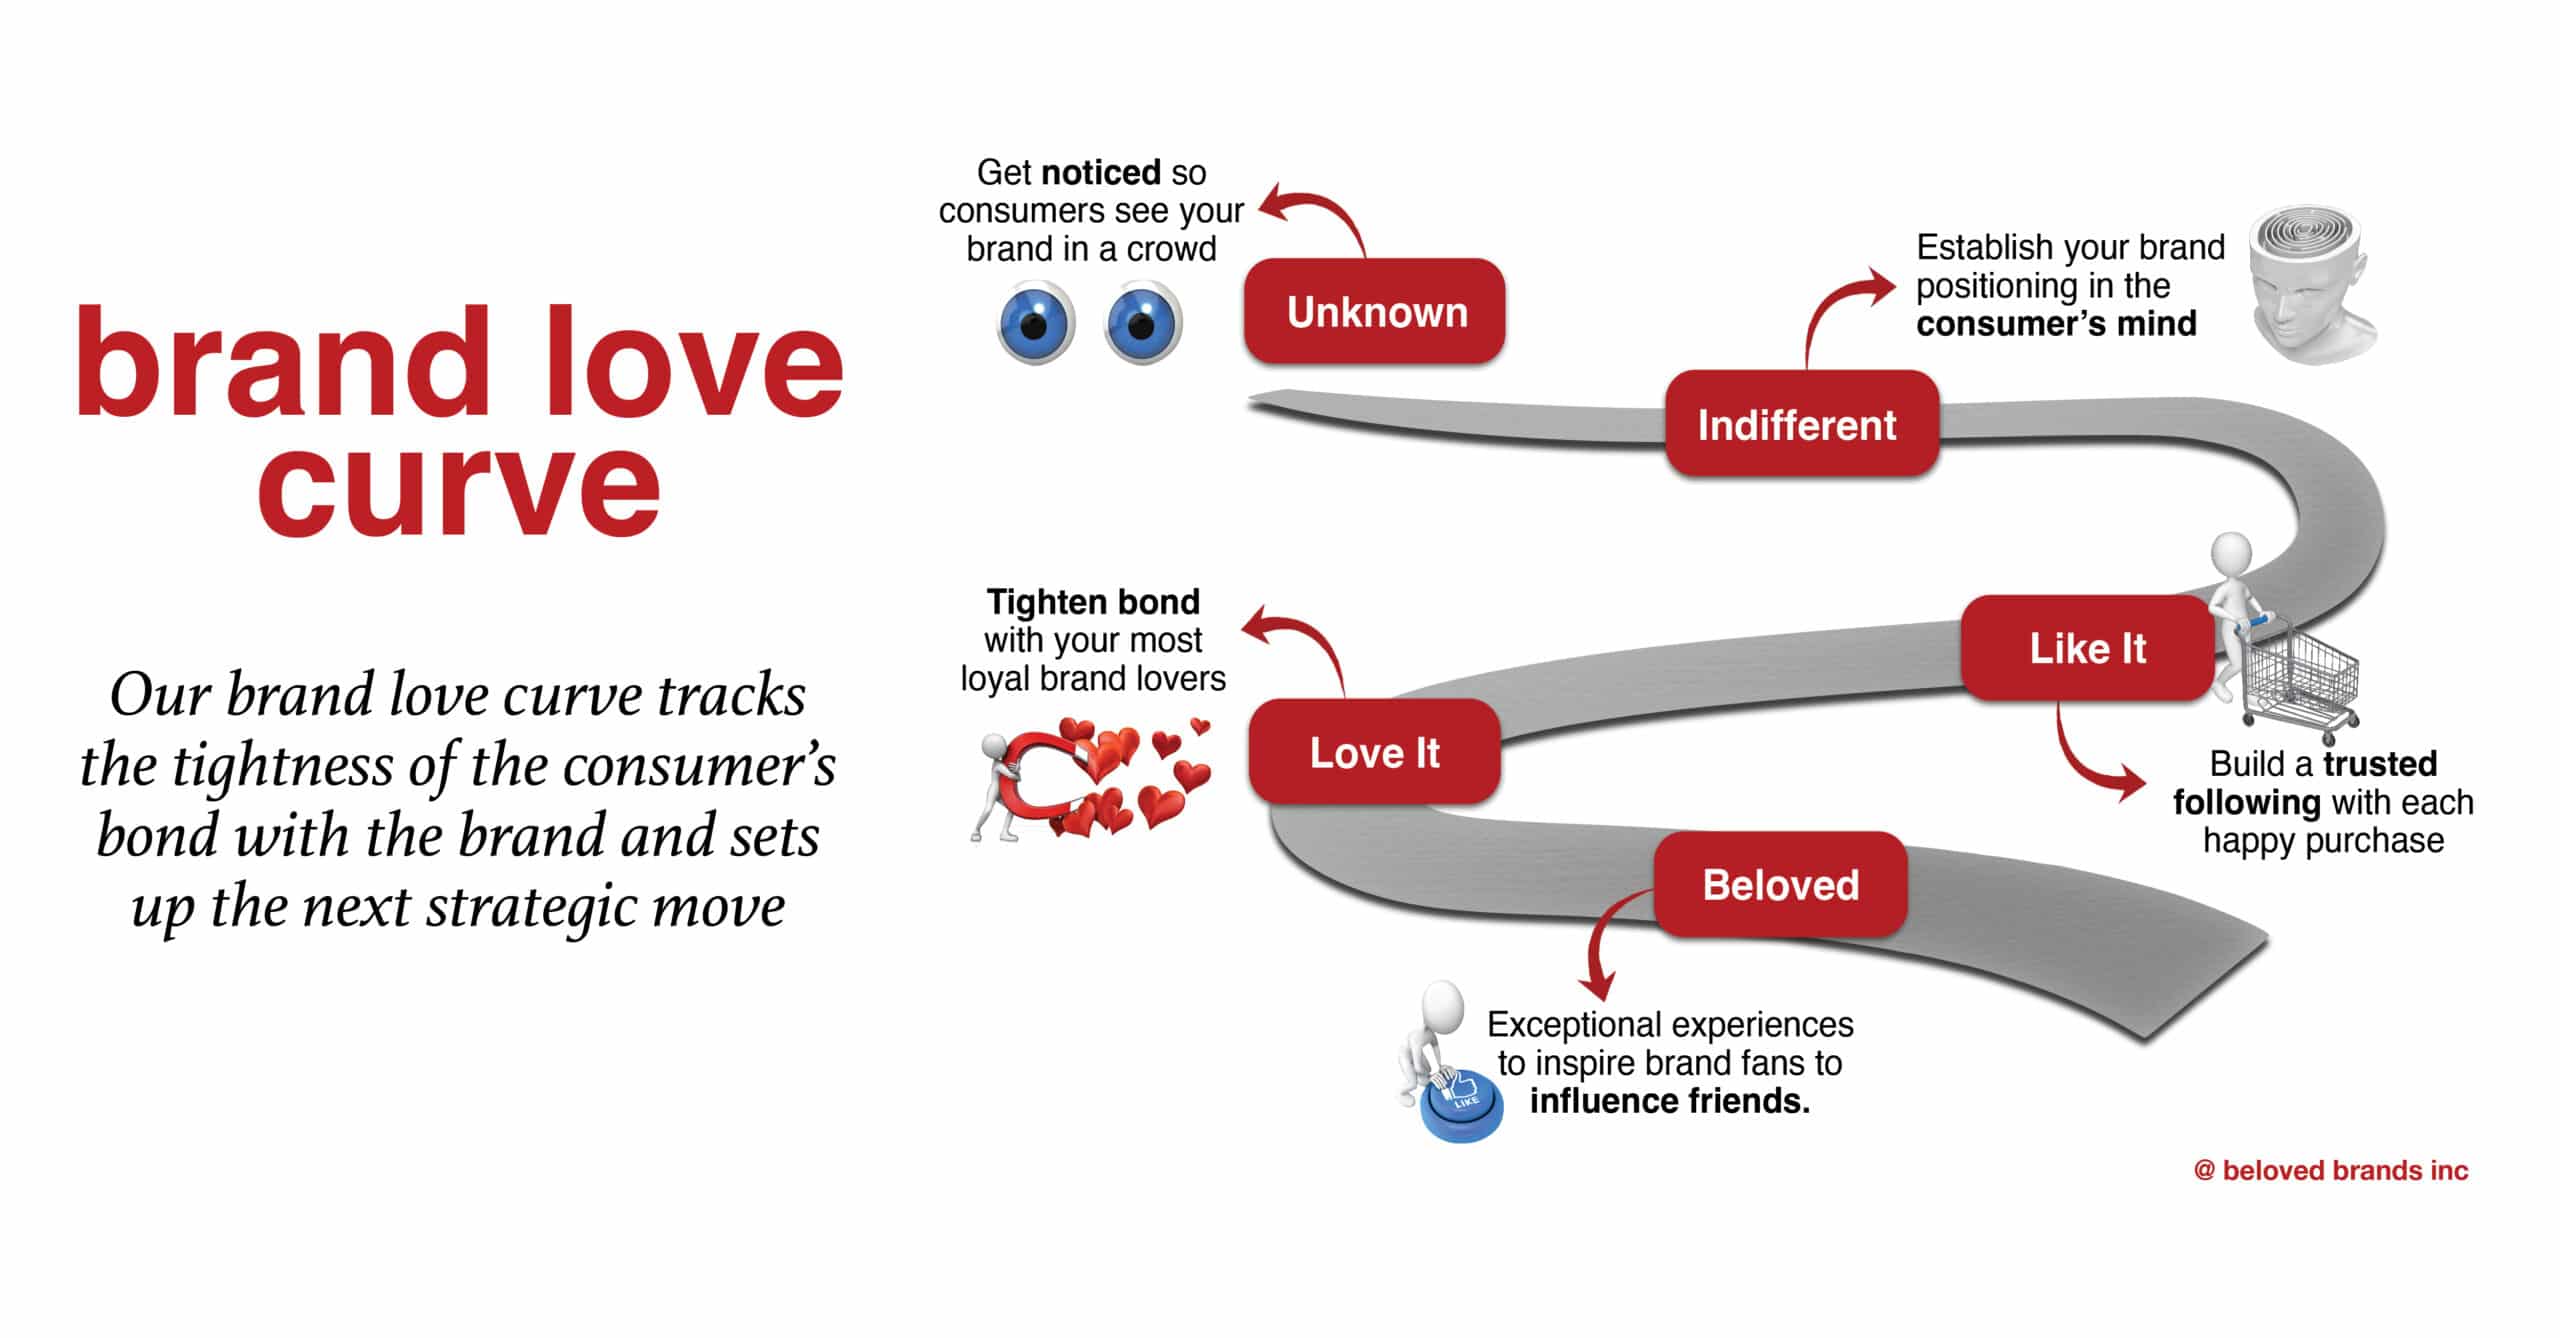 brand love curve explaining brand intimacy